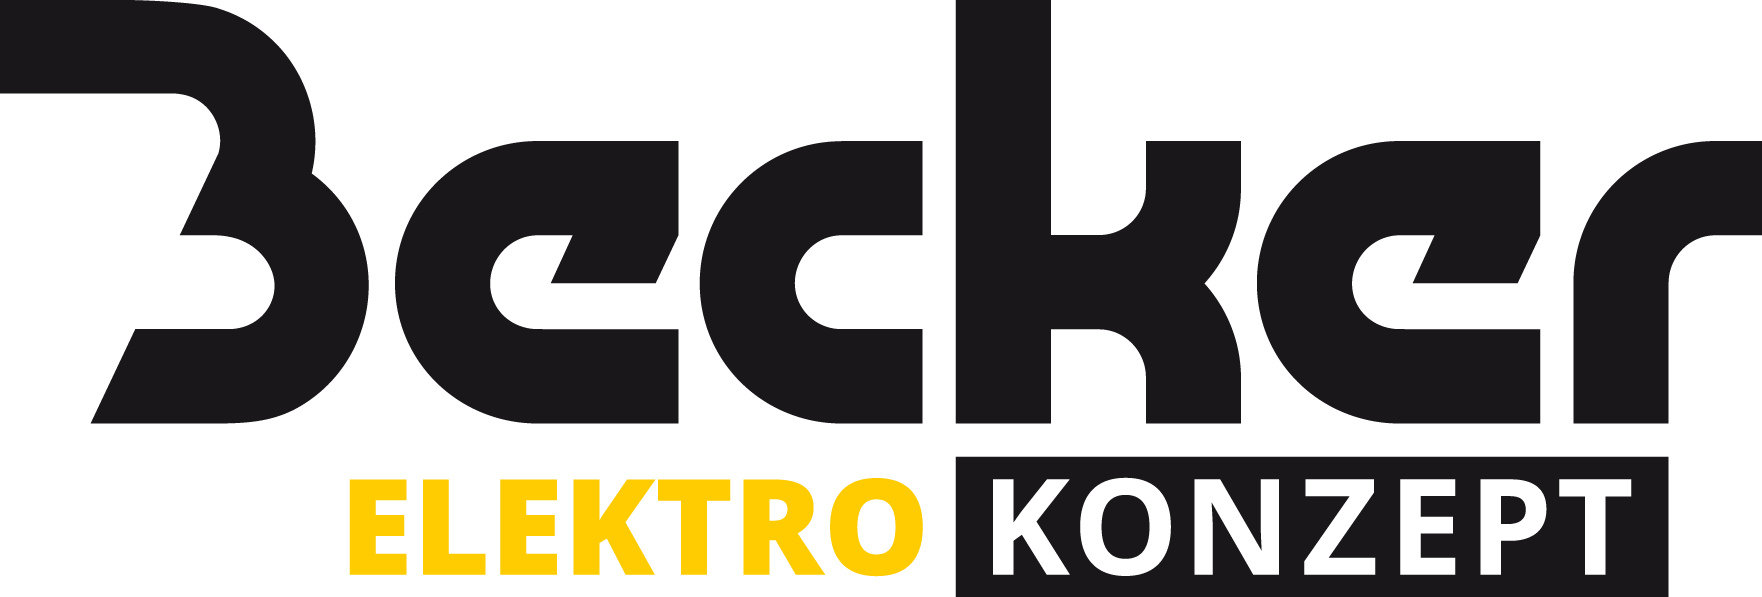 Becker Elektro Konzept Logo